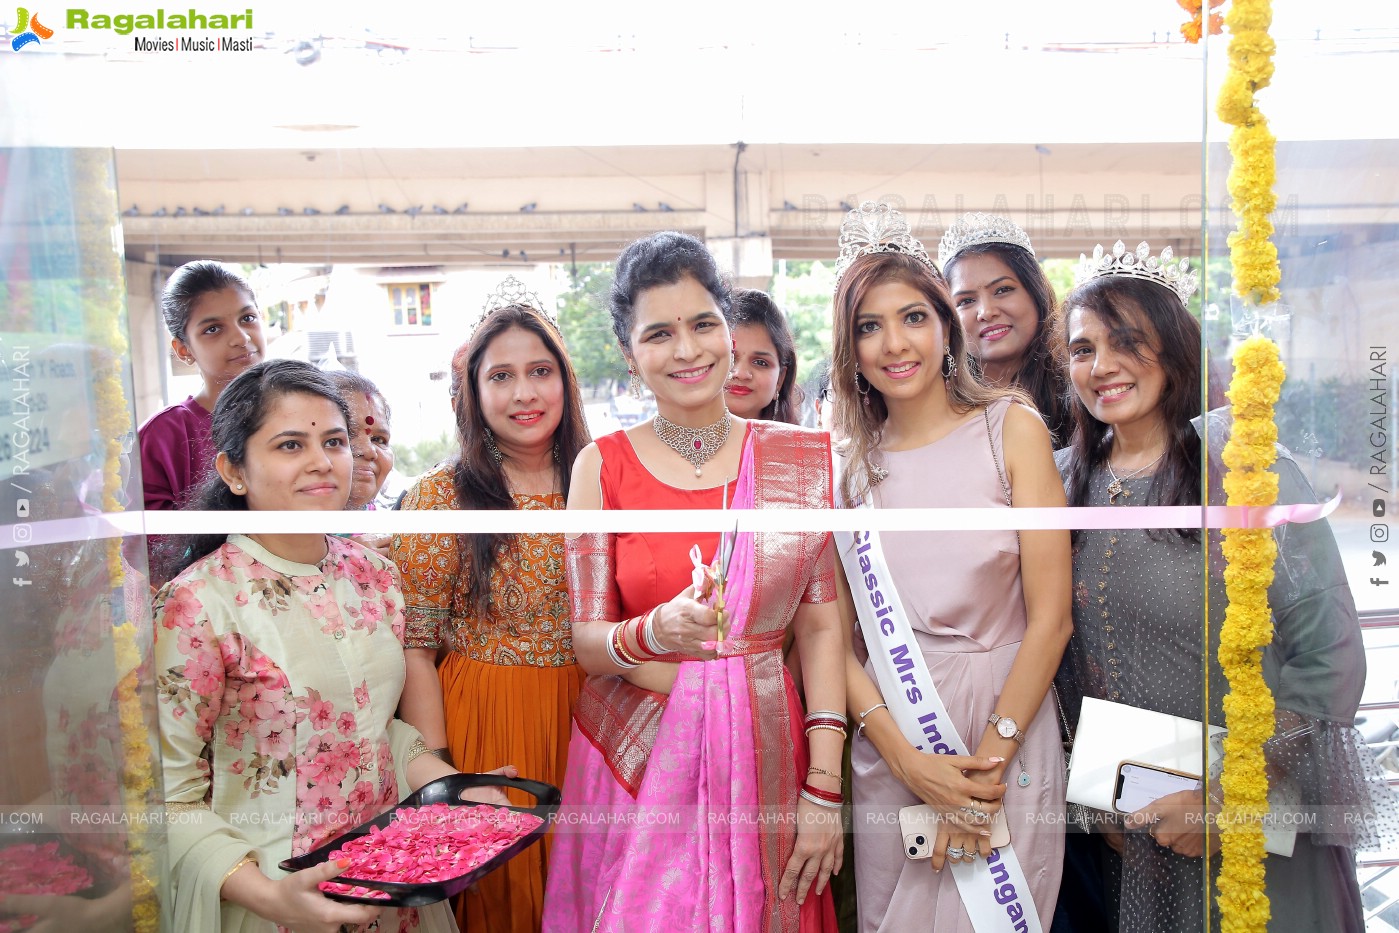 Sri Avanthi Silks 7th Anniversary Celebrations and Models Fashion Walk